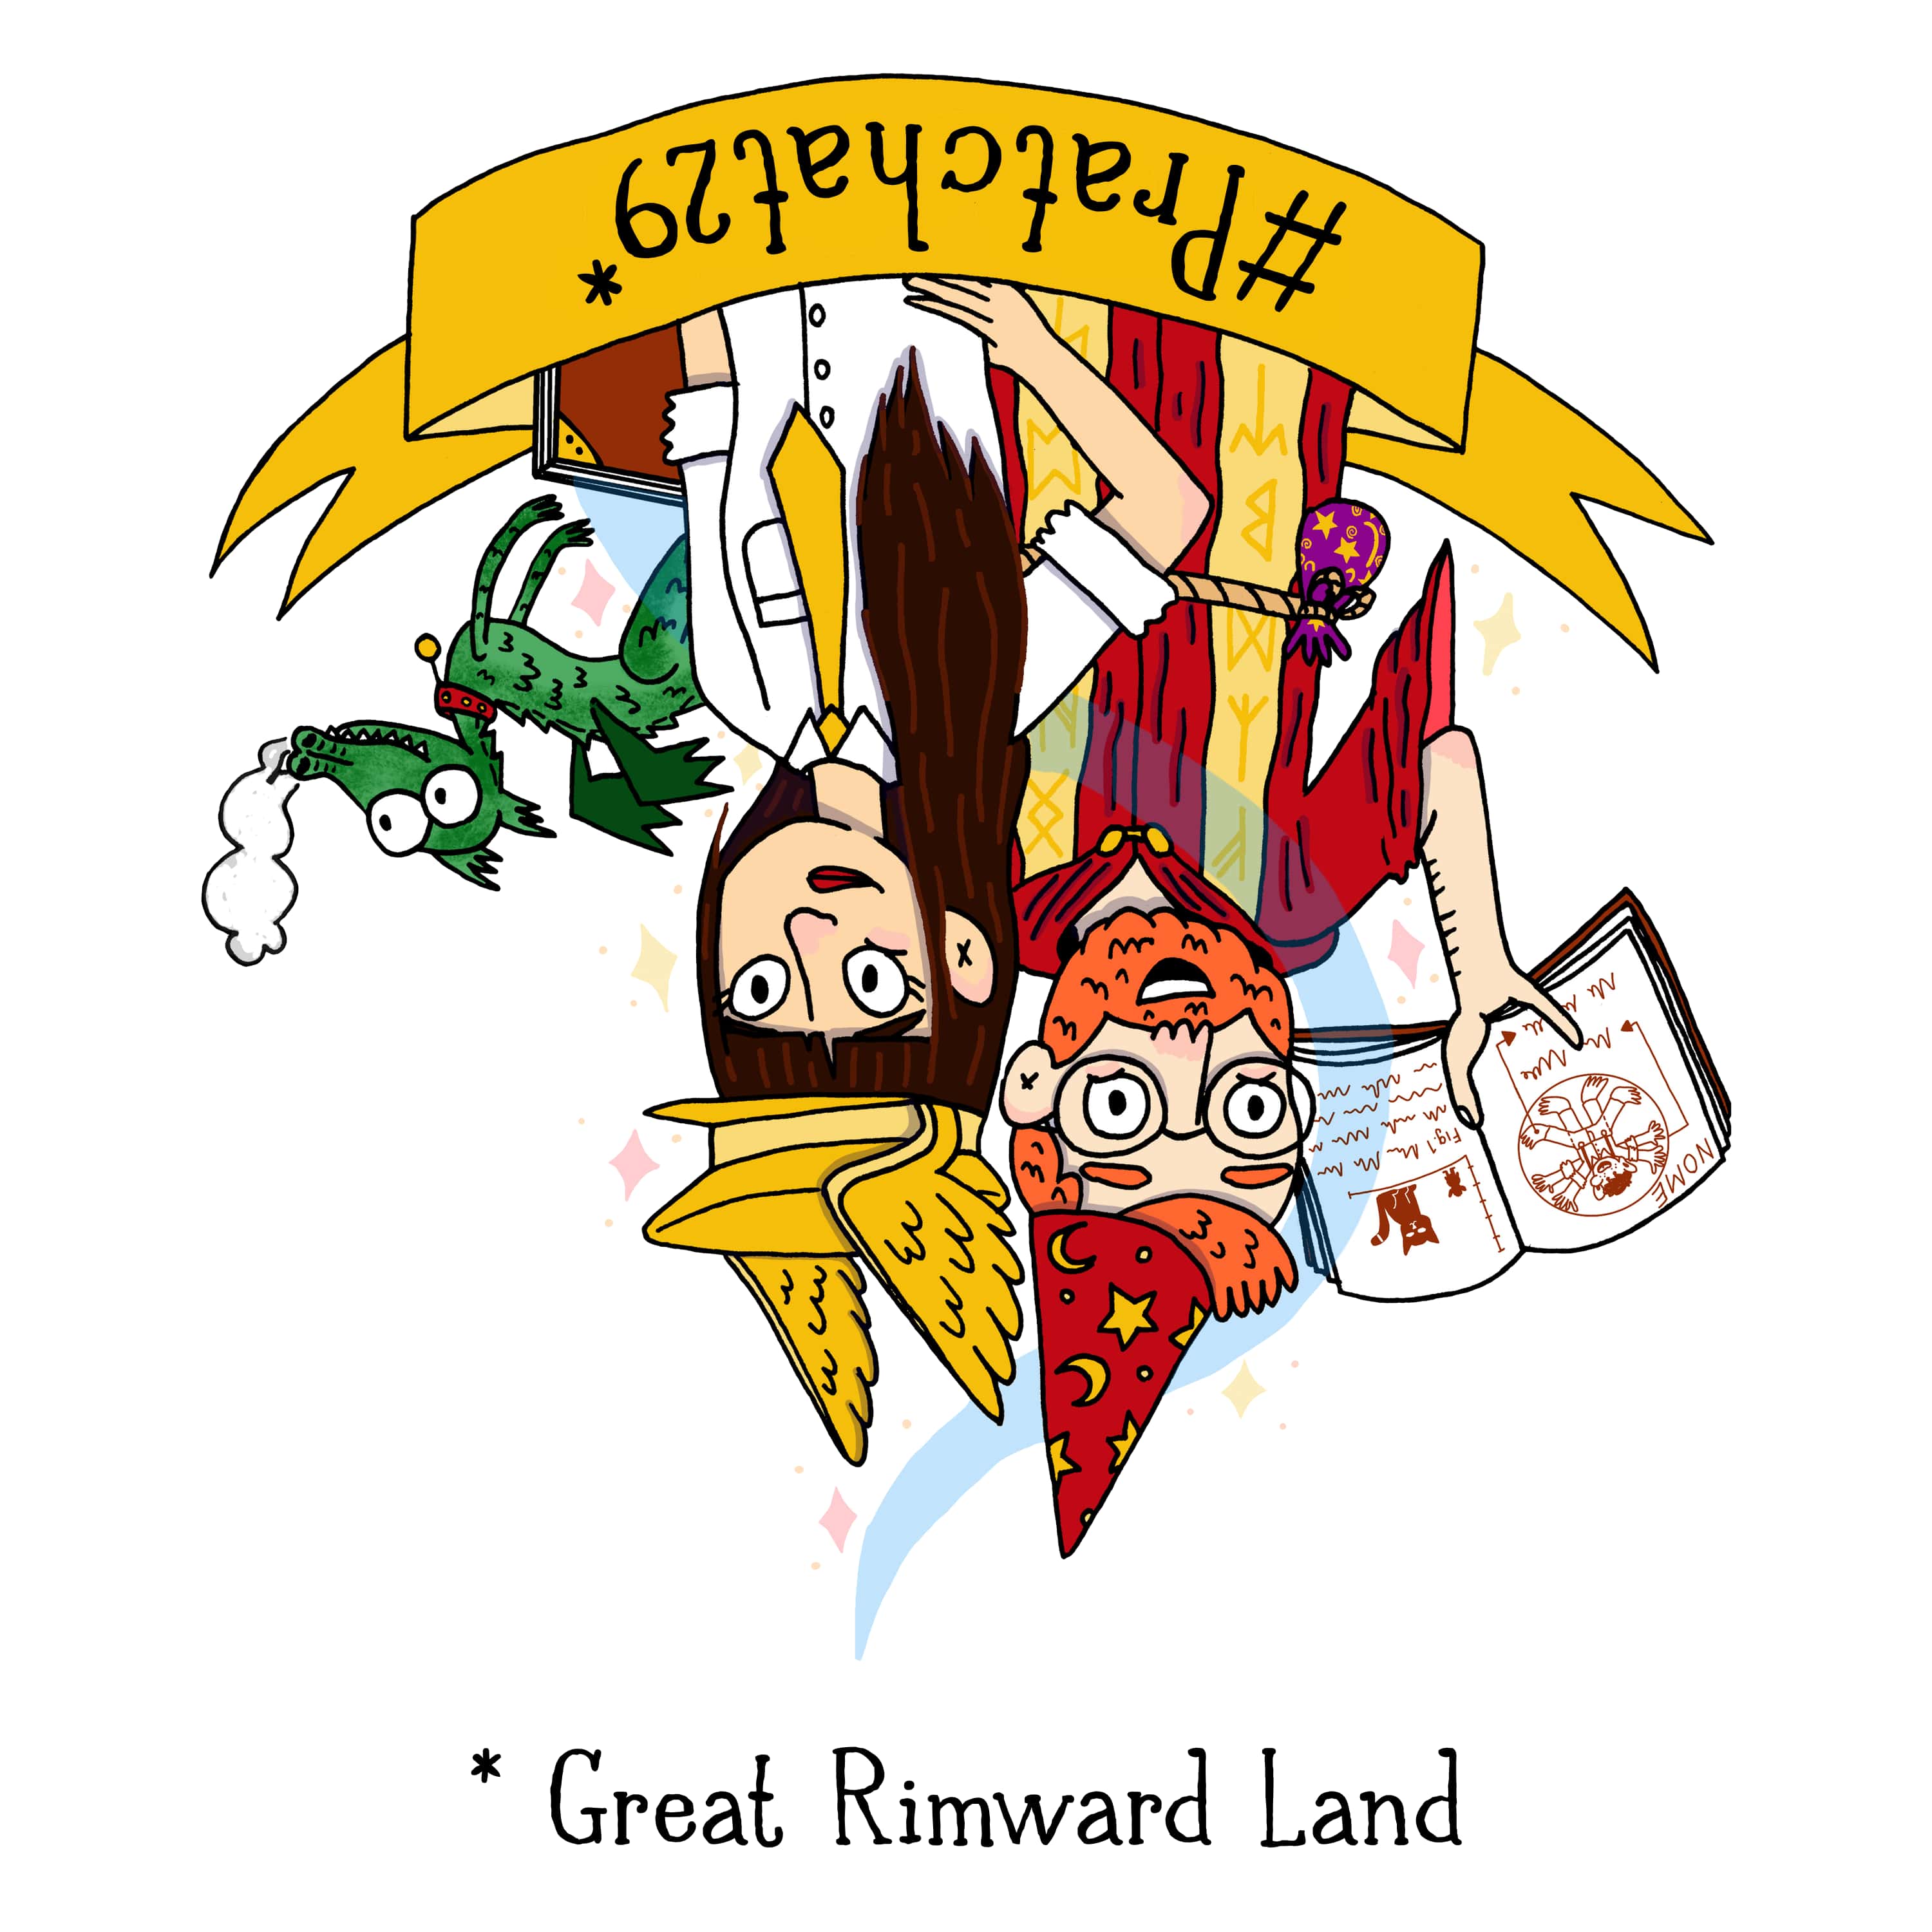 Great Rimward Land (The Last Continent)